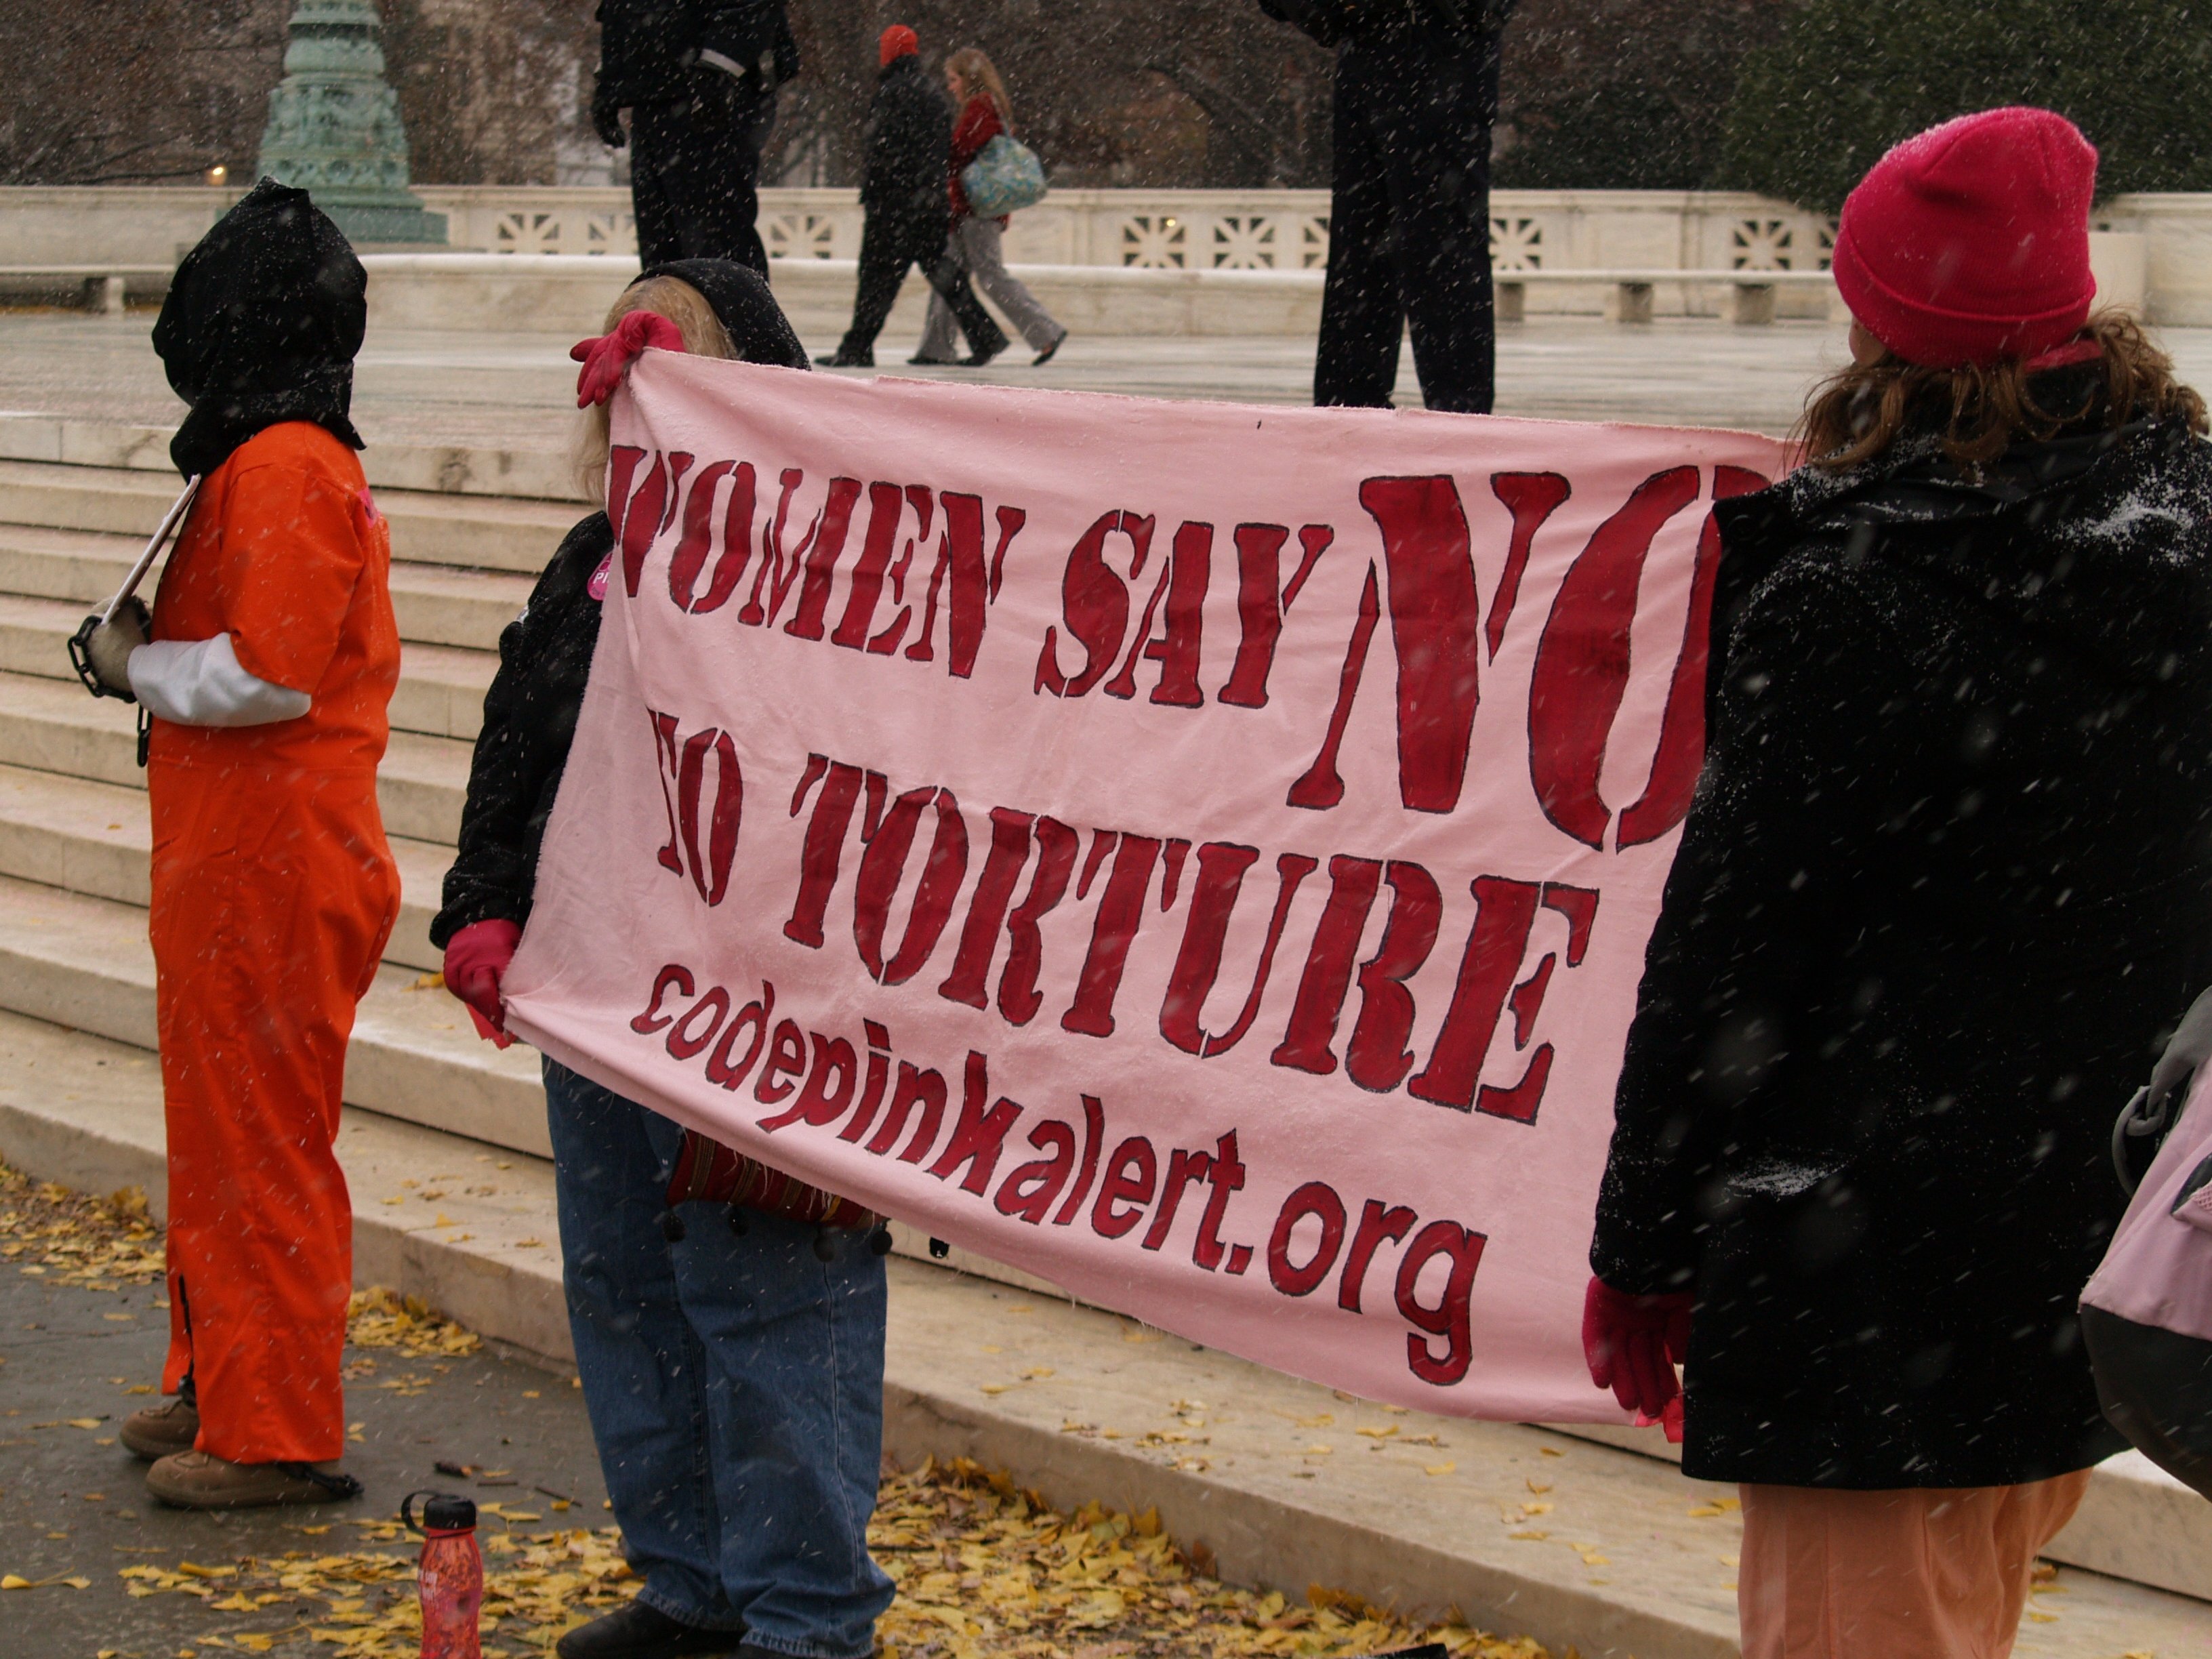 Women say no to torture outside the third Congressional hearing on Guantanamo, Washington DC, 2007. Photo: Jim Kuhn, CC-2.0.